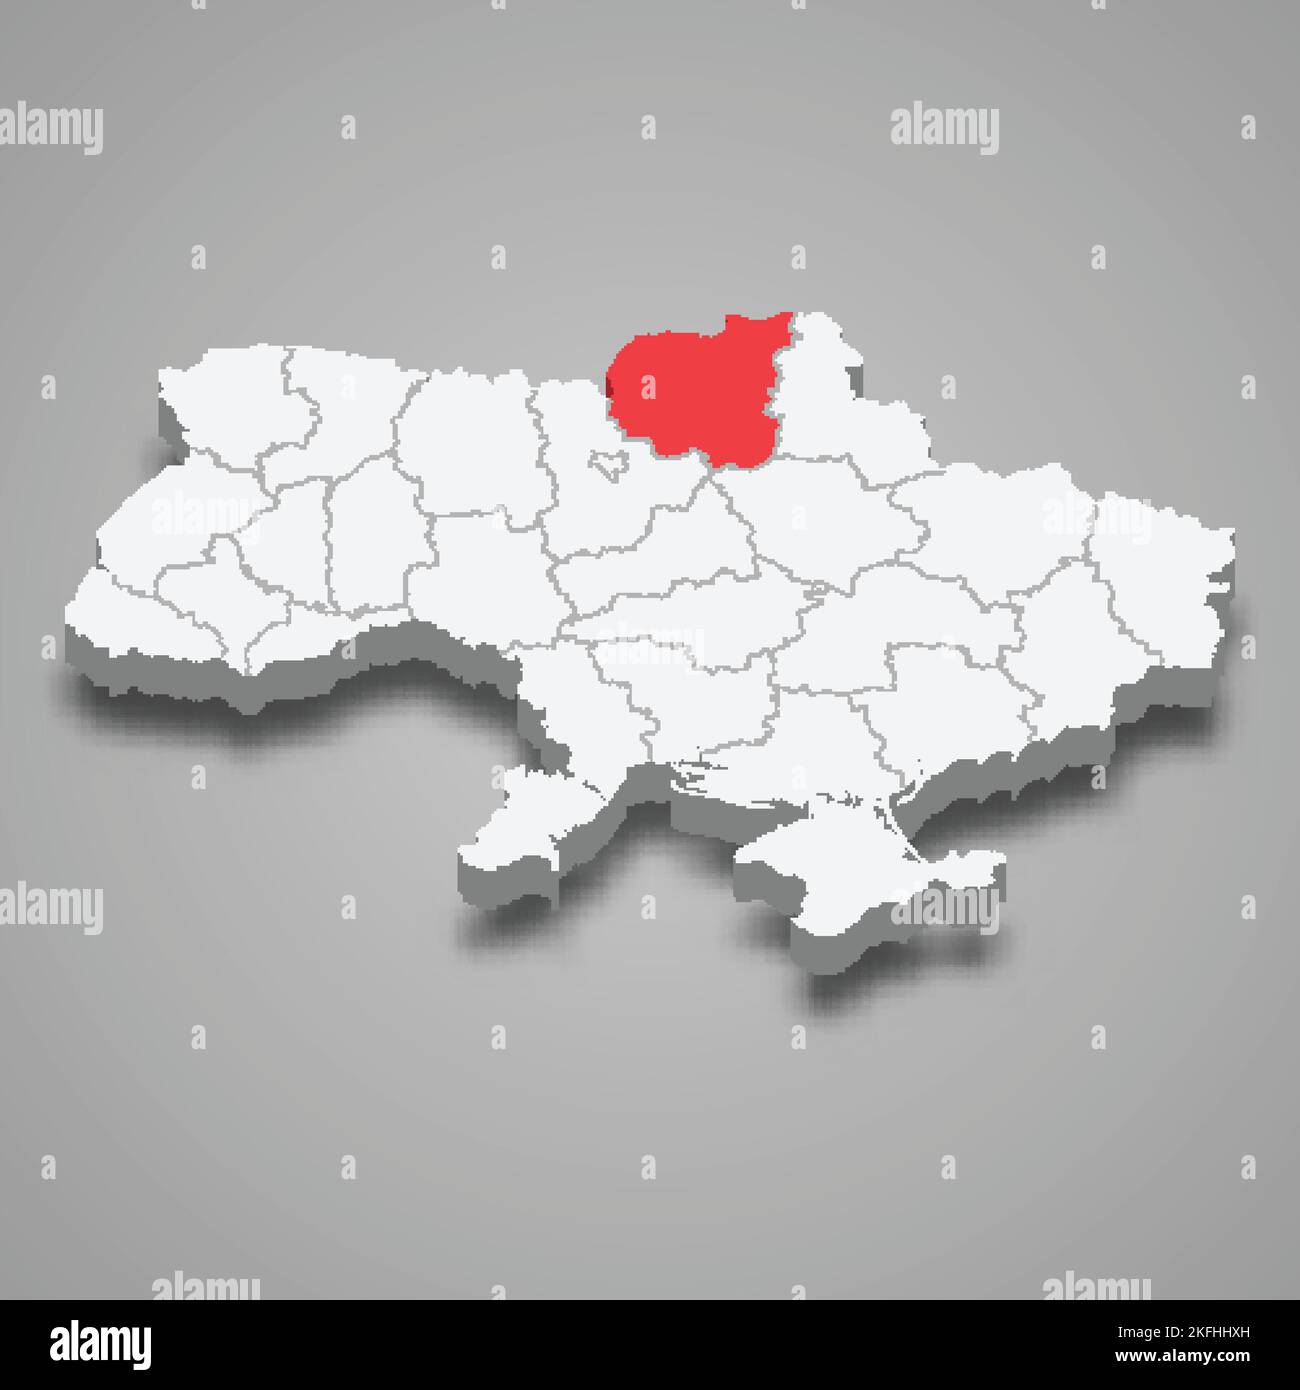 Chernihiv Oblast. Region location within Ukraine 3d isometric map Stock Vector